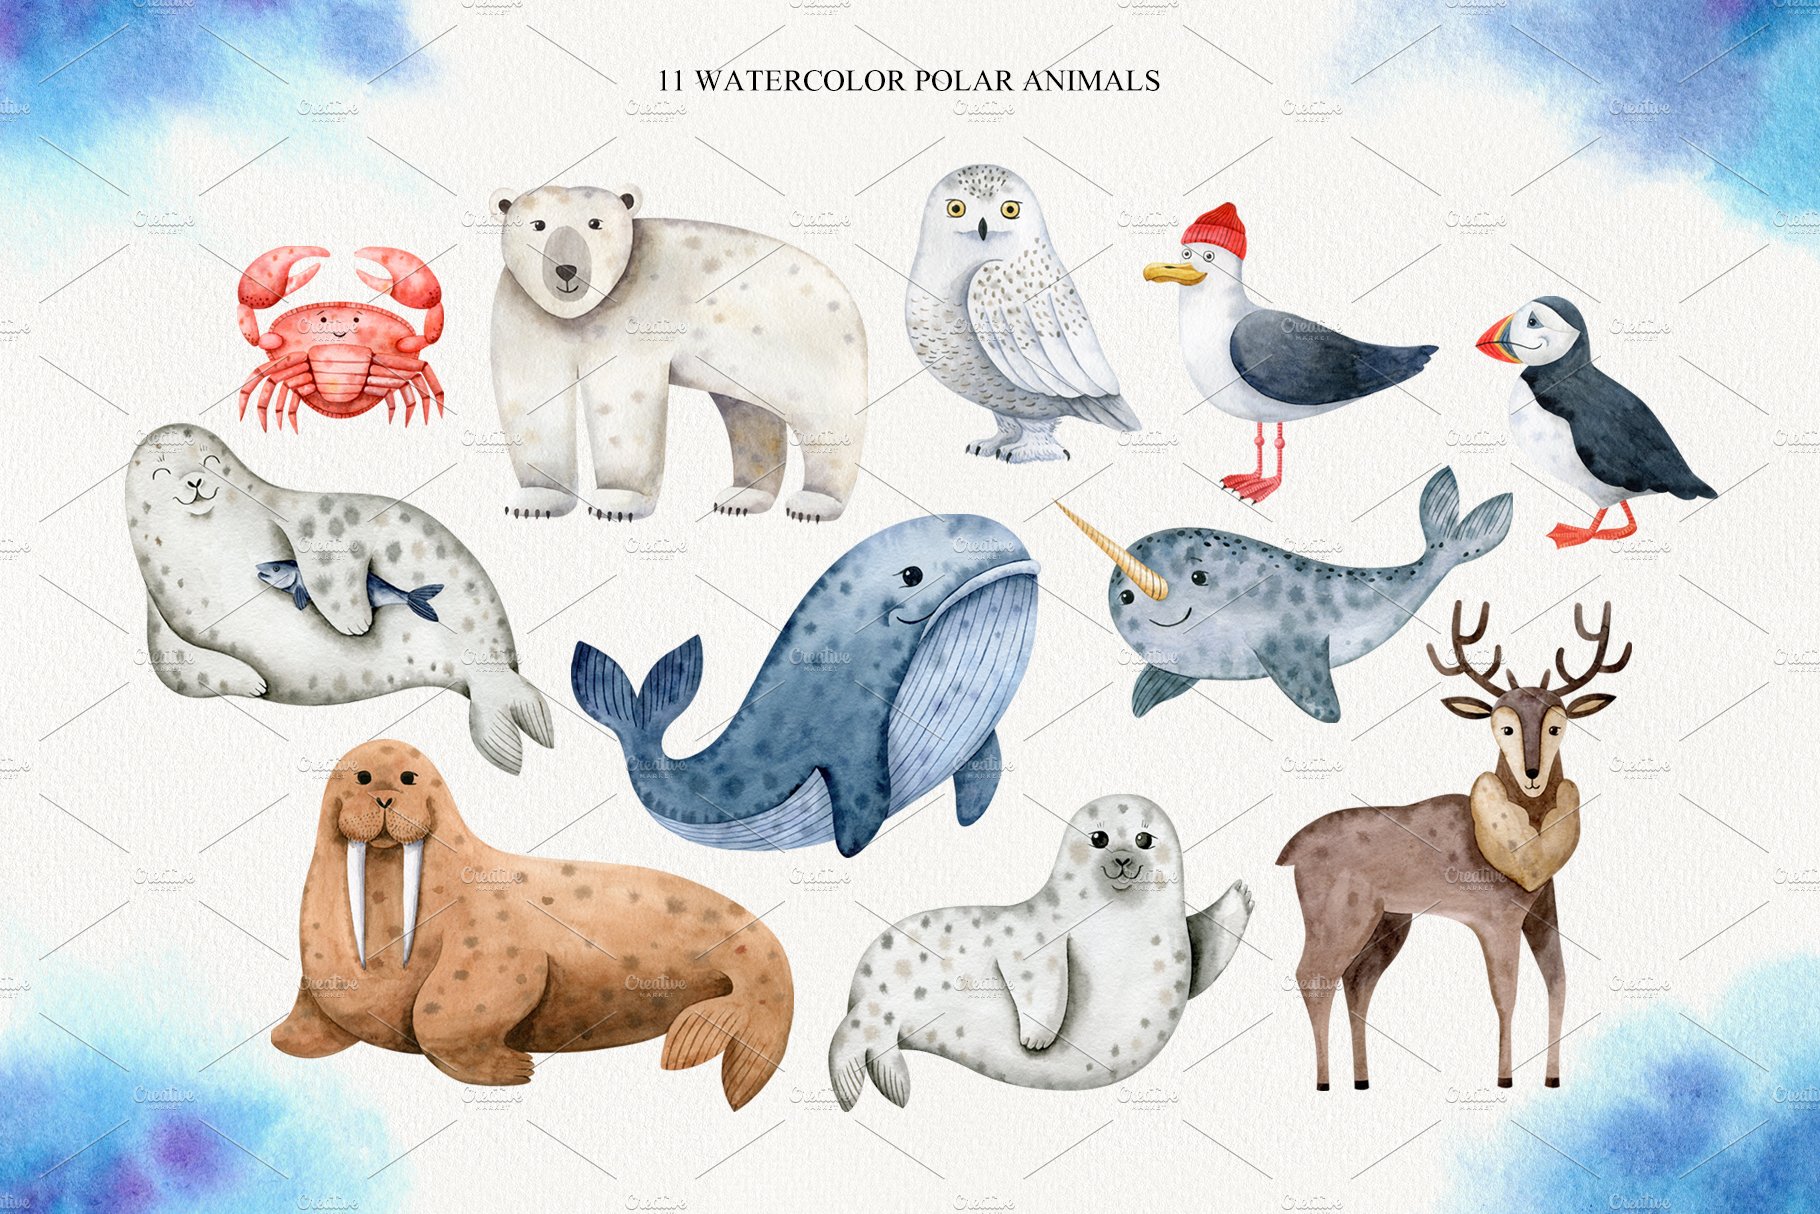 So cute Northern watercolor animals.